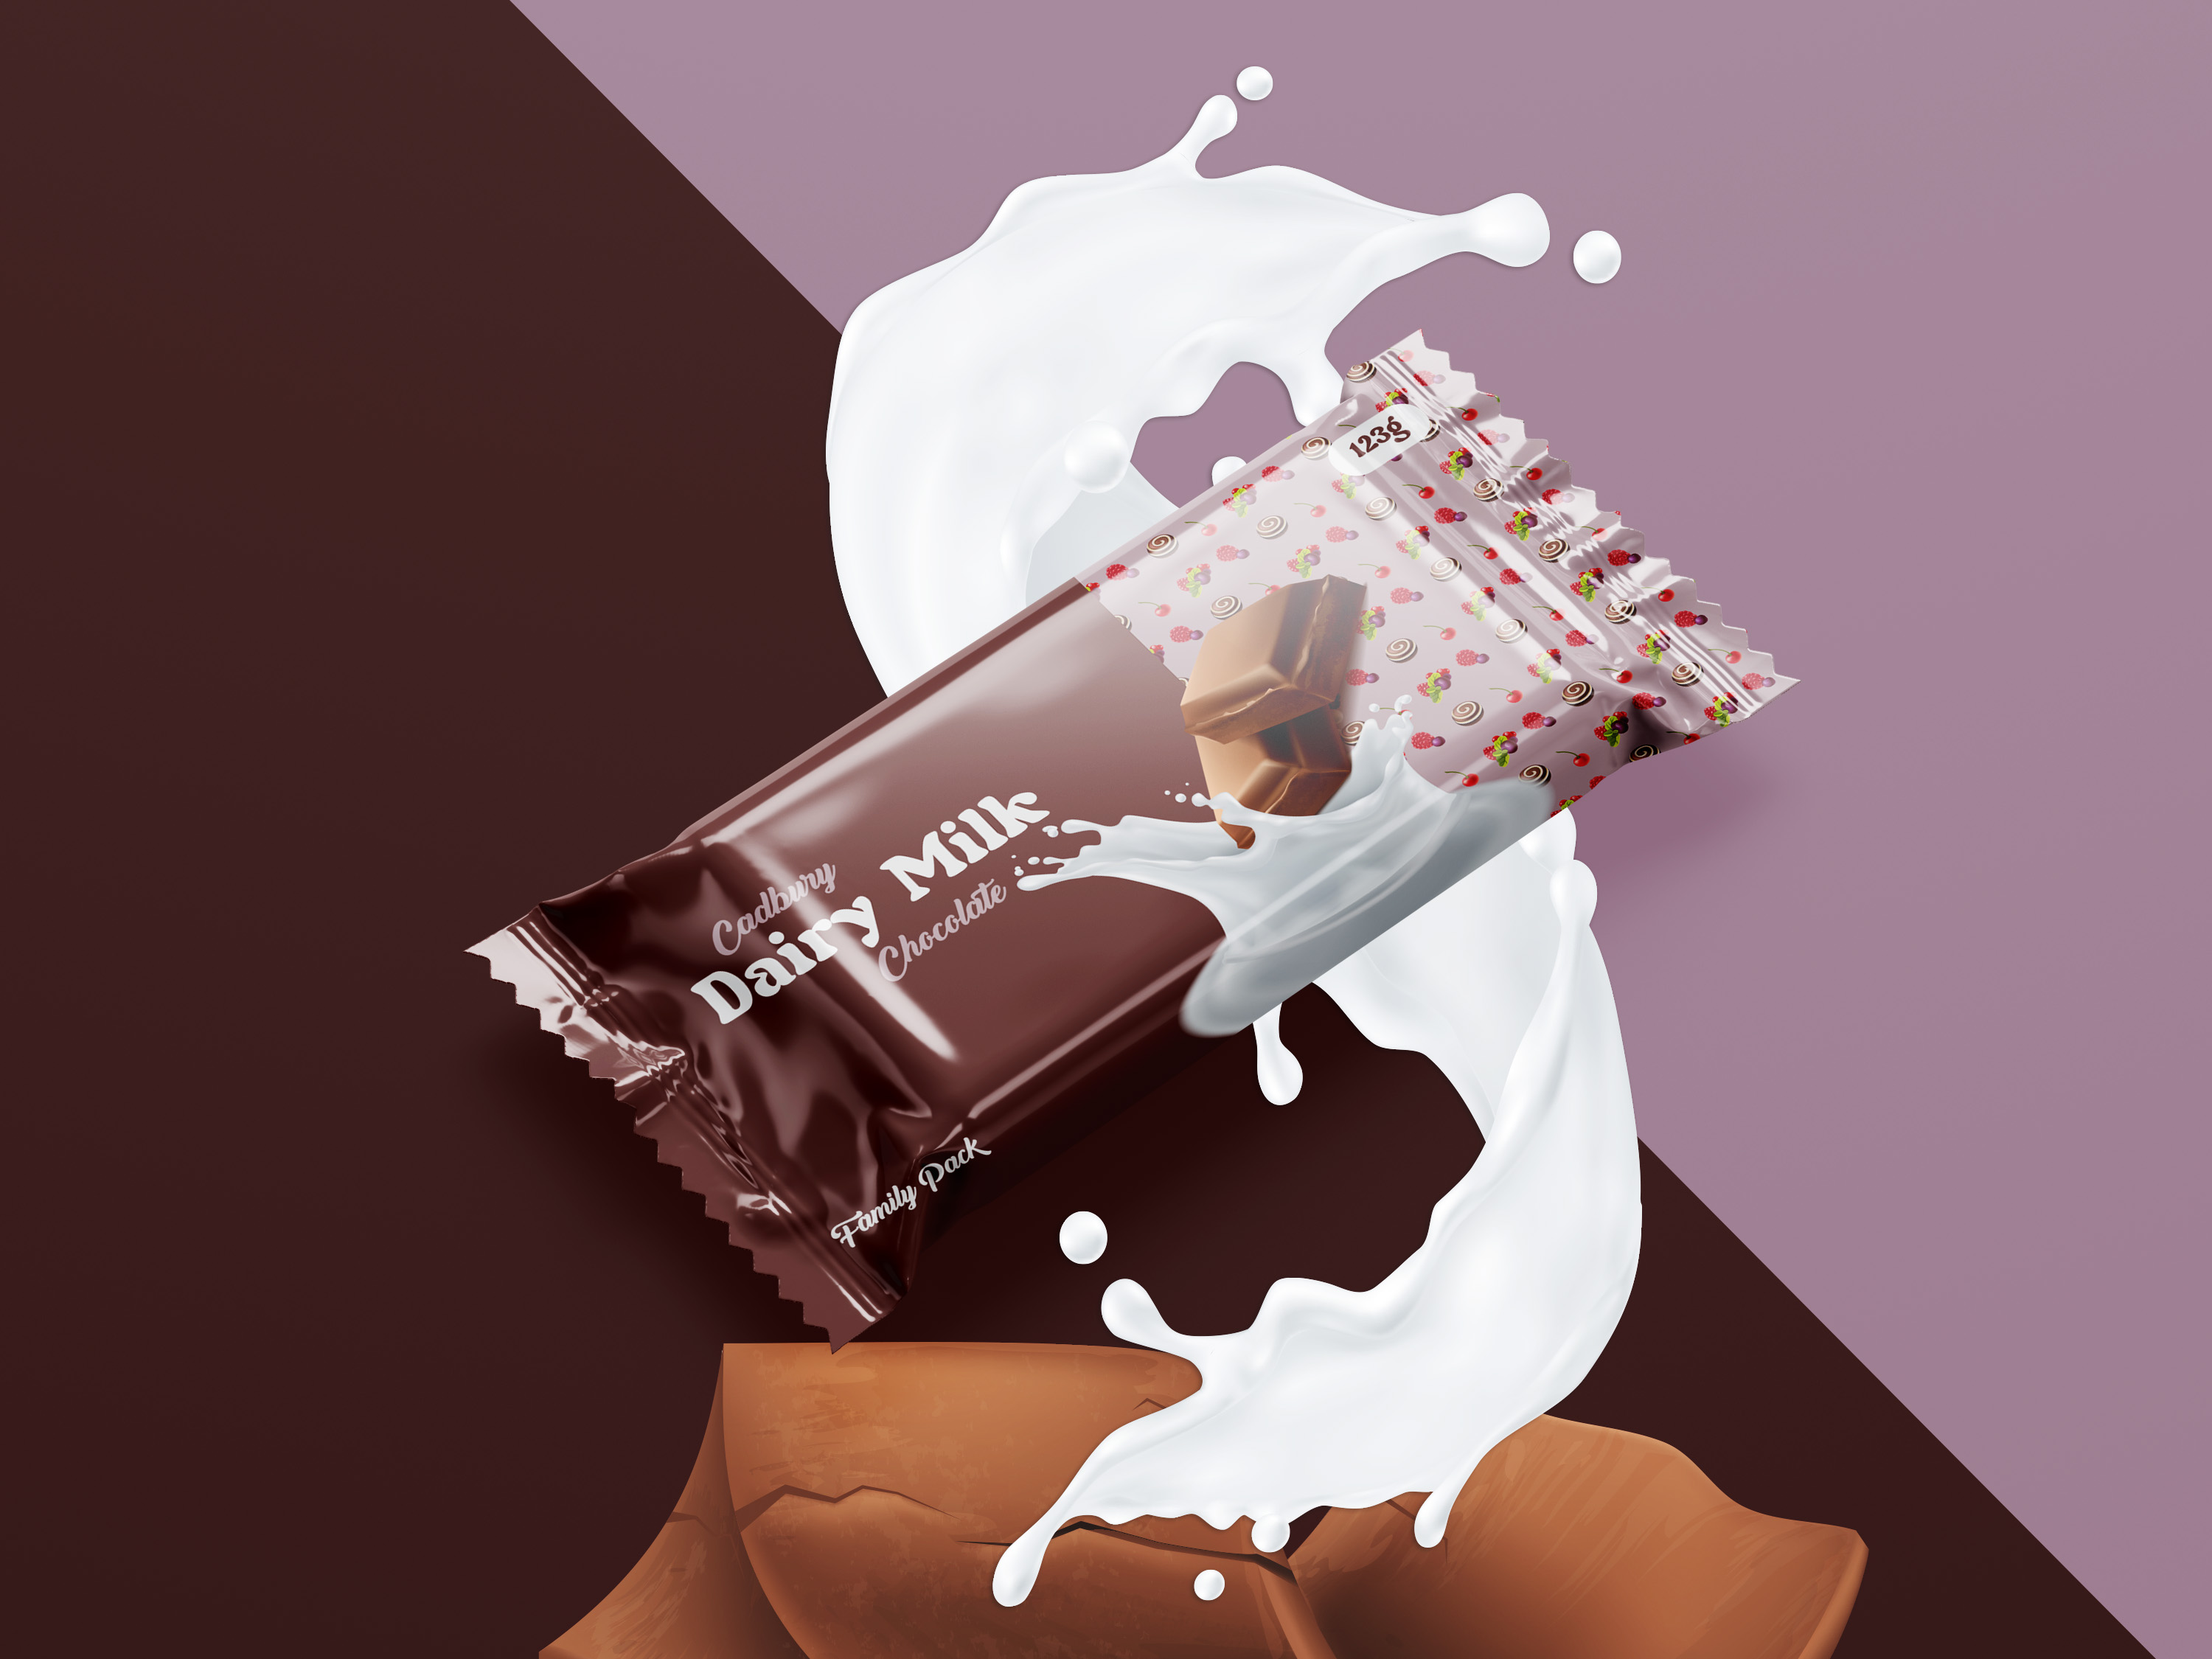 Cadbury Dairy Milk Chocolate Bar, 123 g